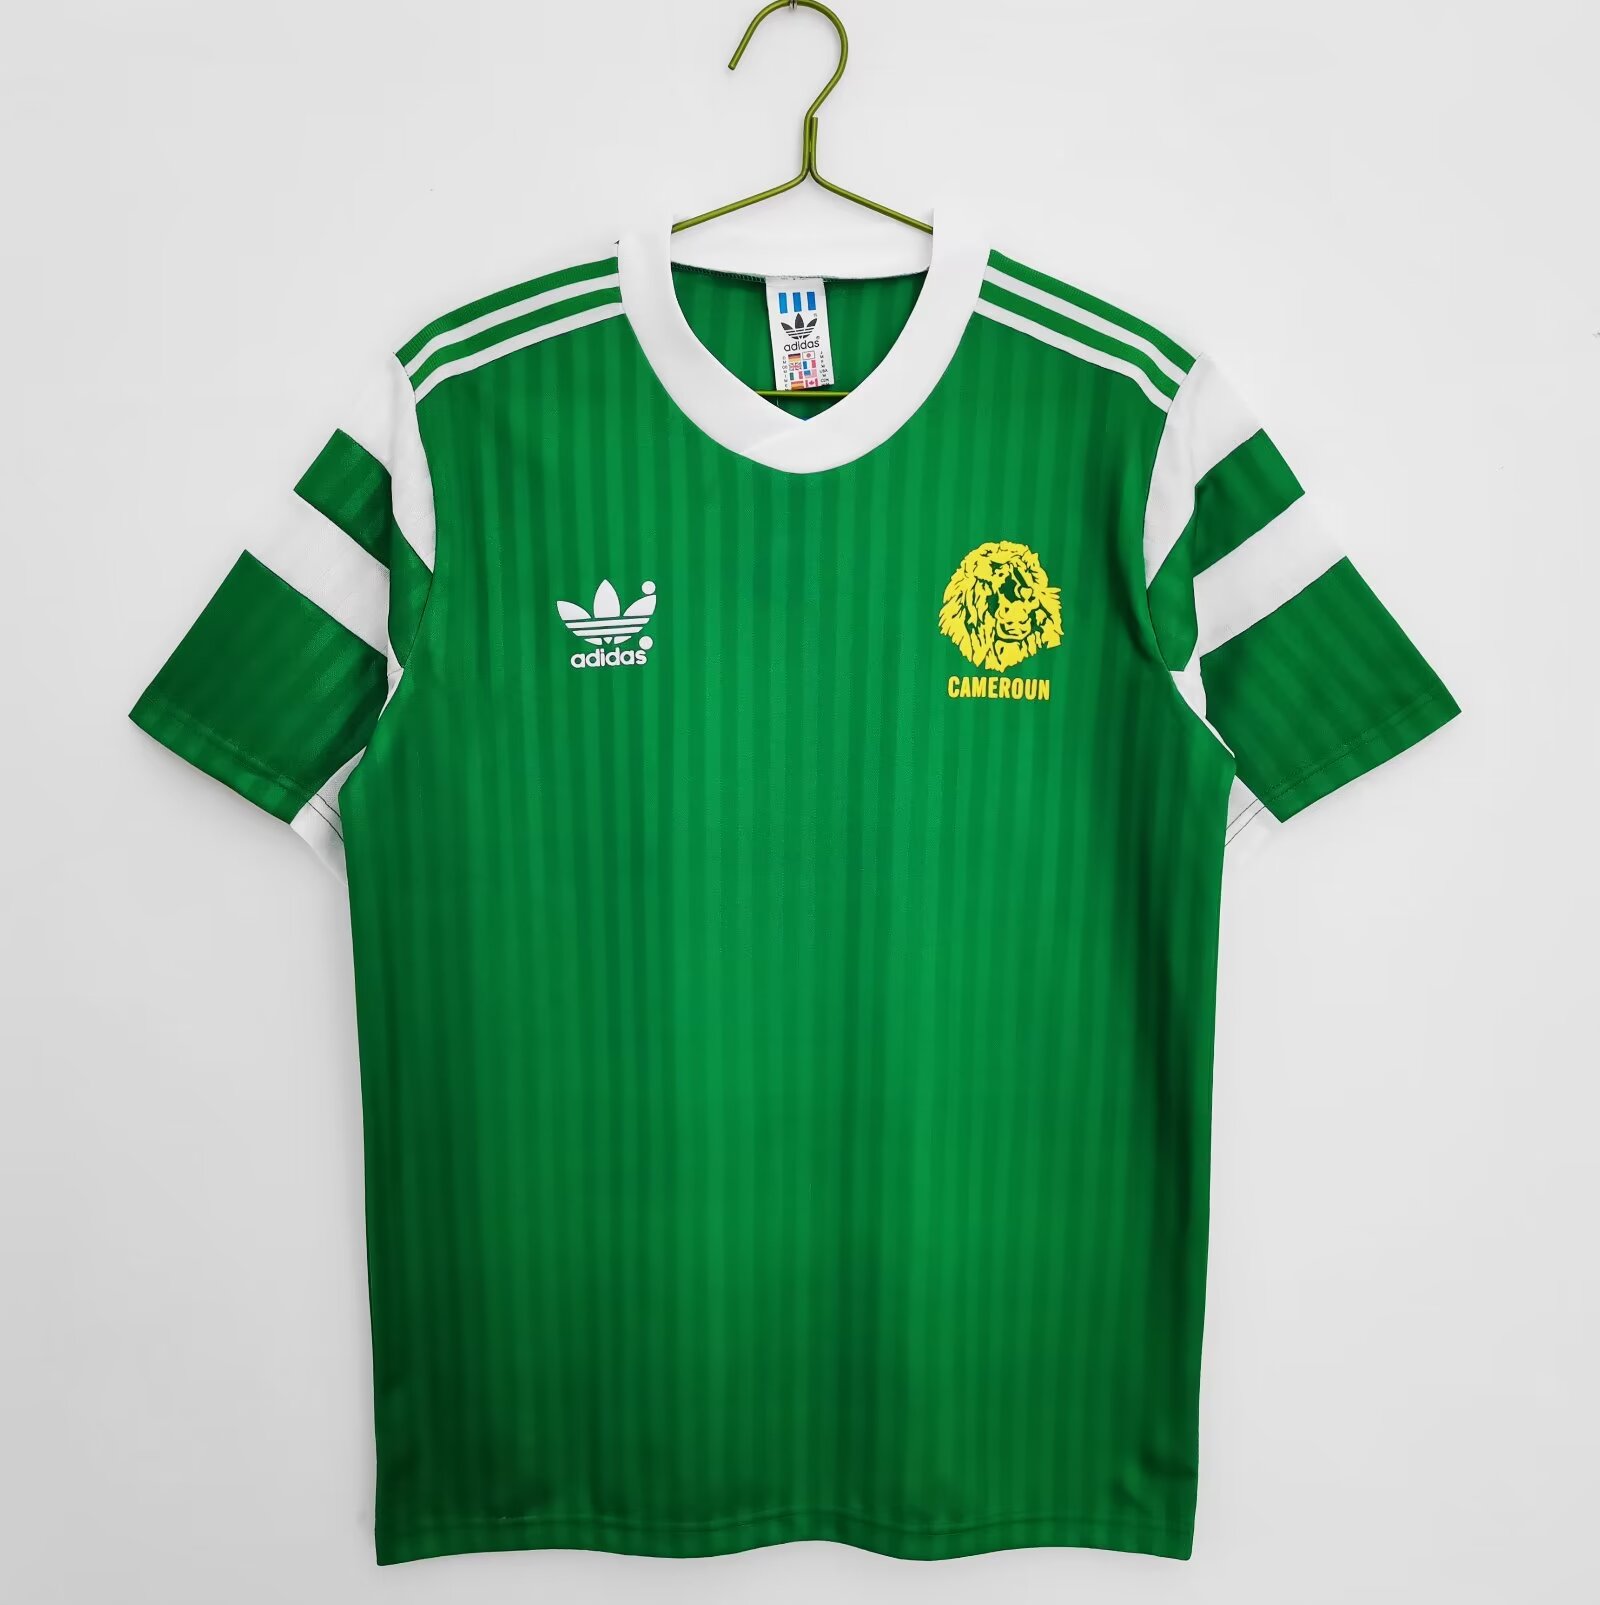 1990 Cameroon national football team